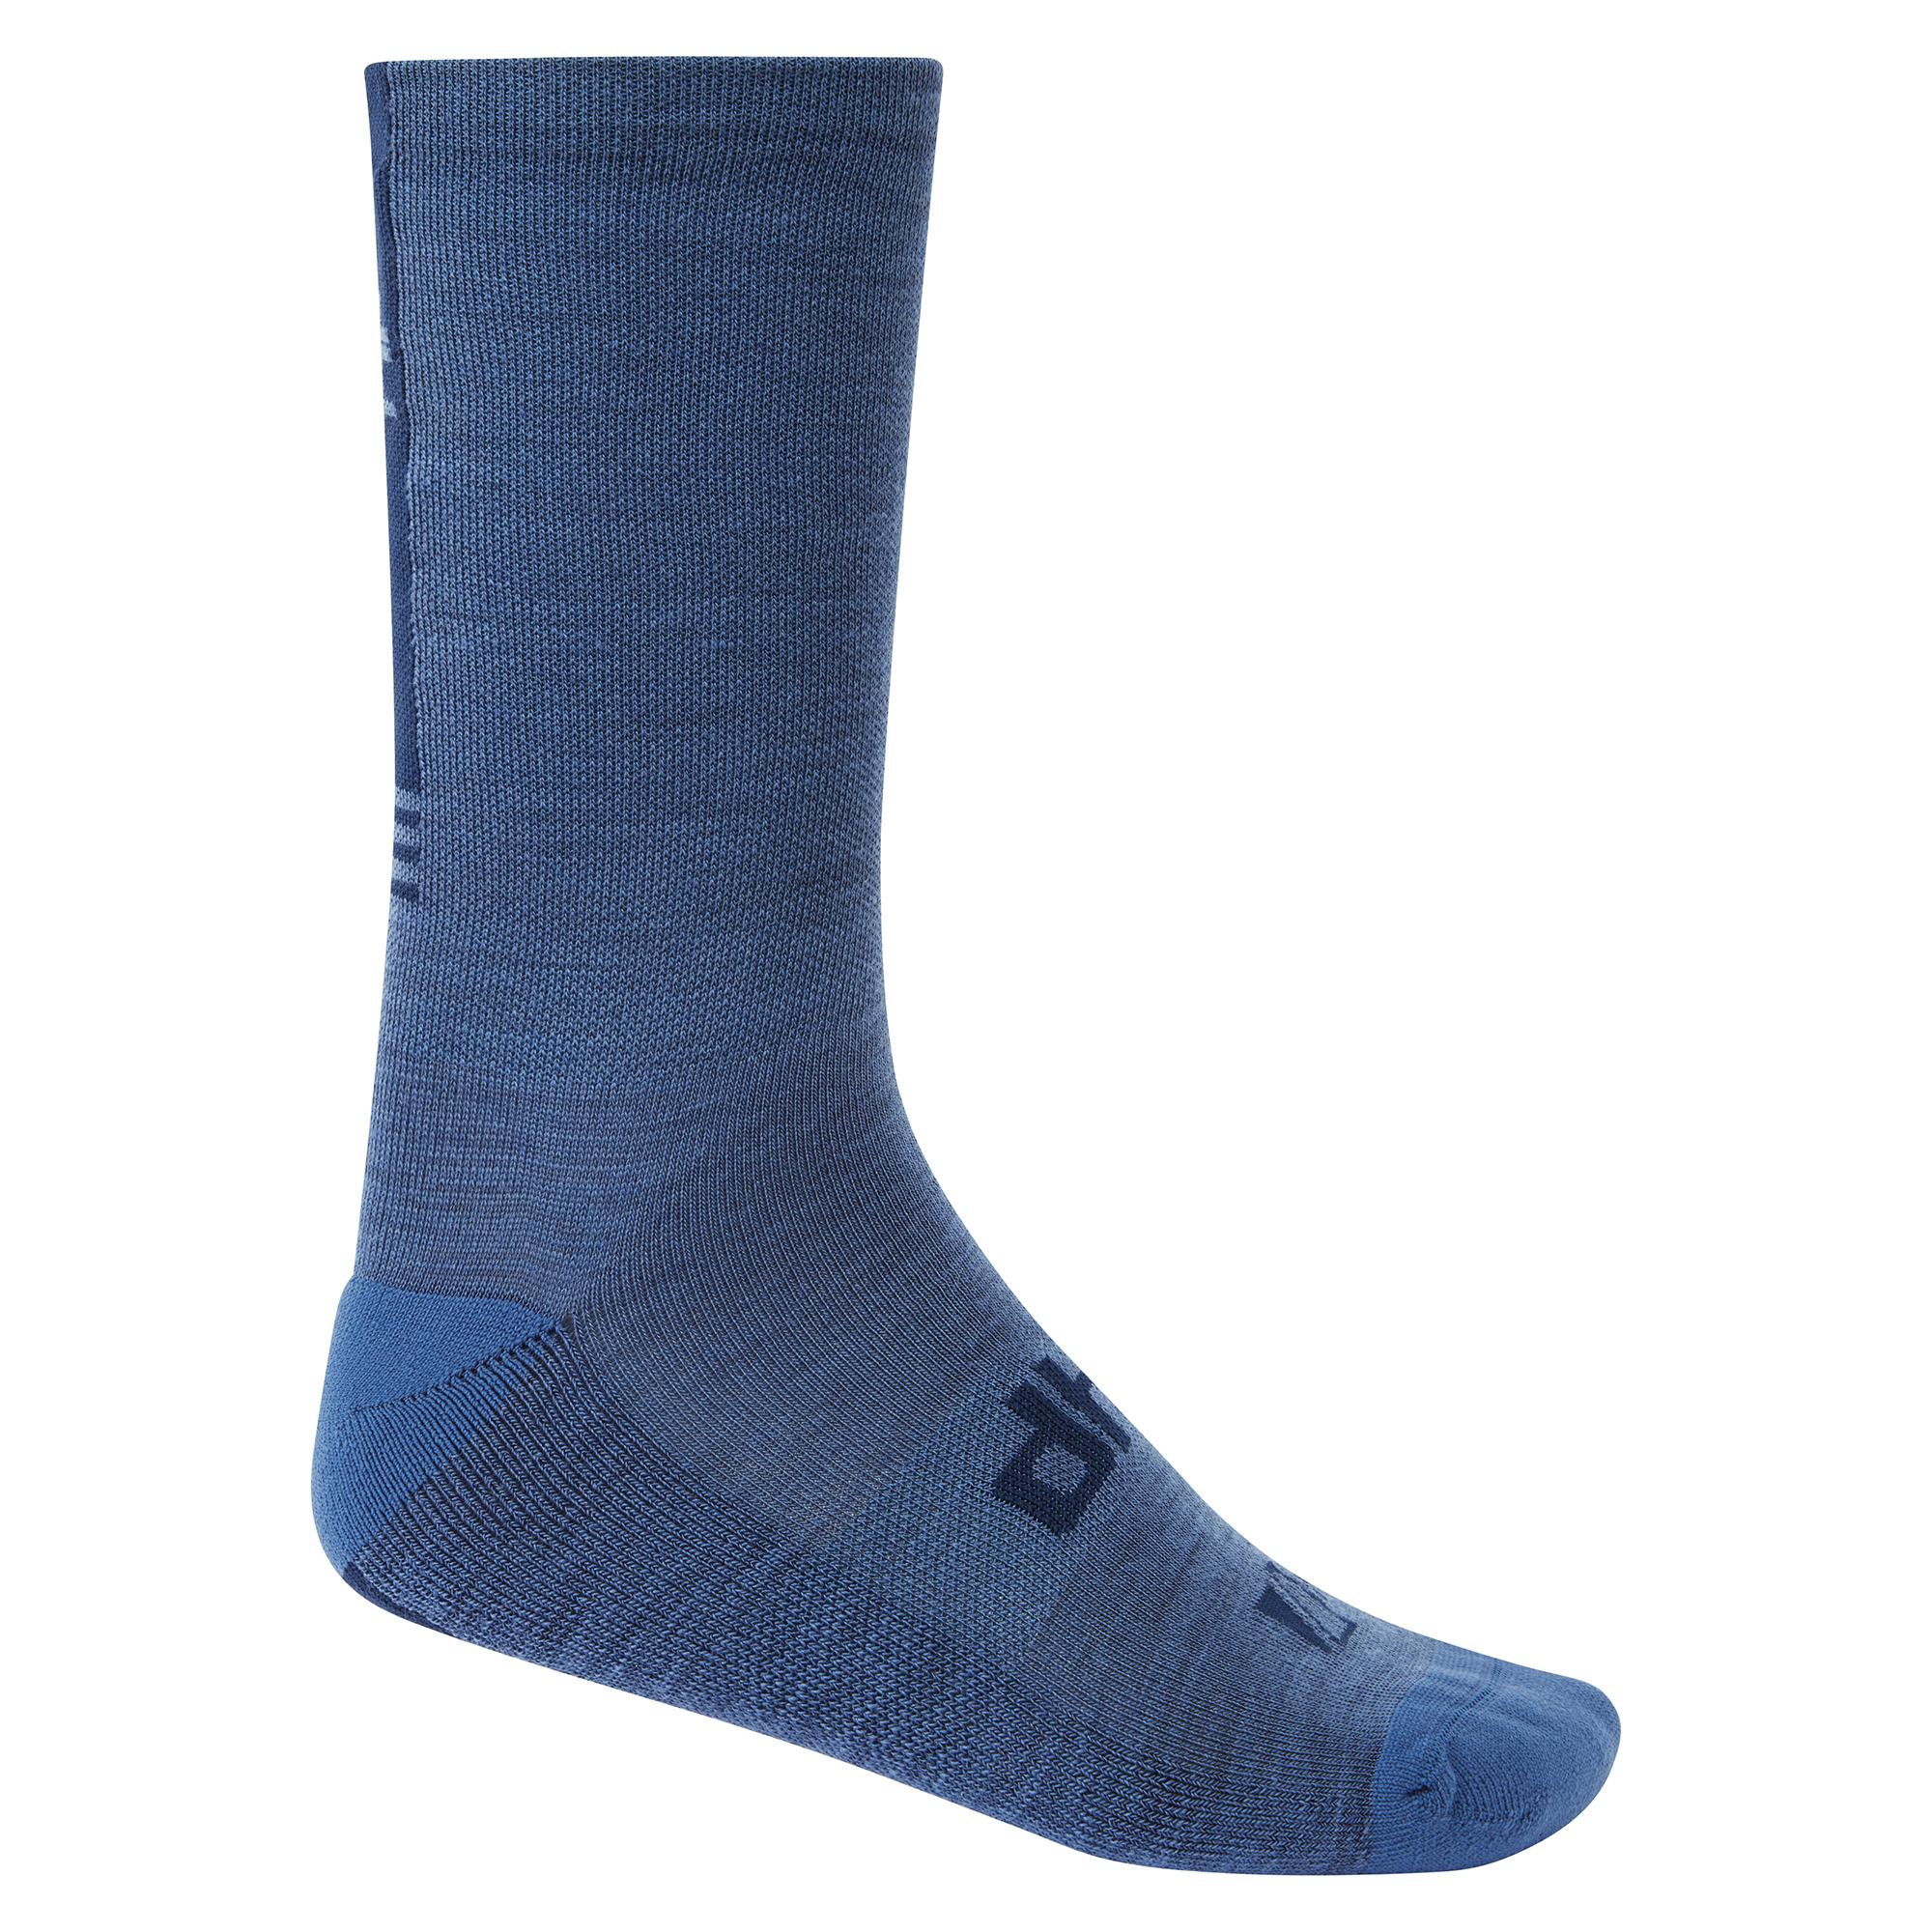 Dhb Aeron Merino Sock 2.0 - Blue